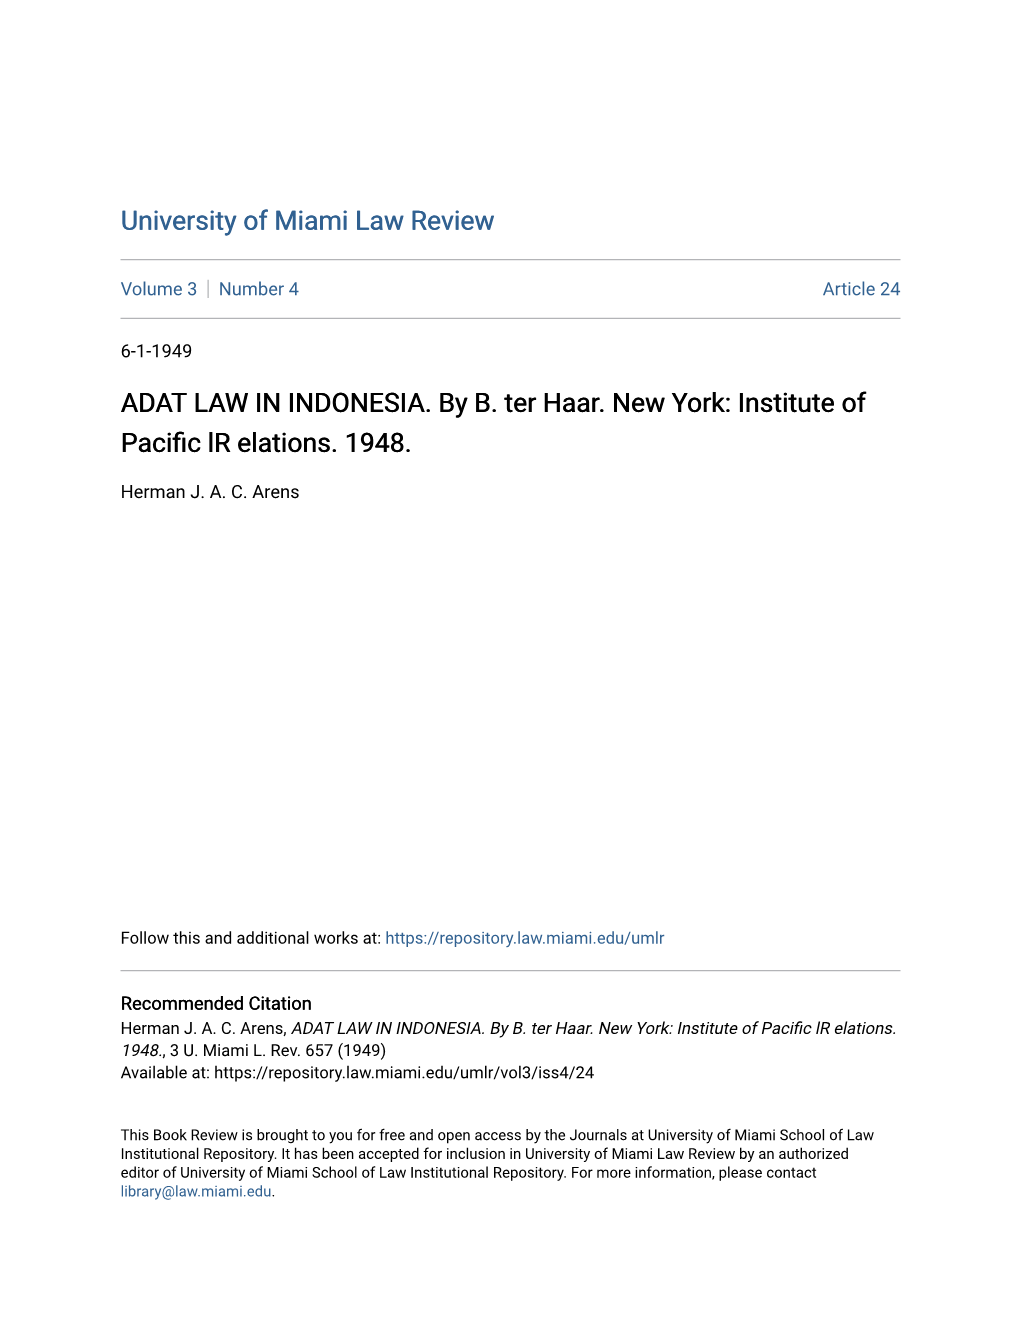 ADAT LAW in INDONESIA. by B. Ter Haar. New York: Institute of Pacific Lr Elations